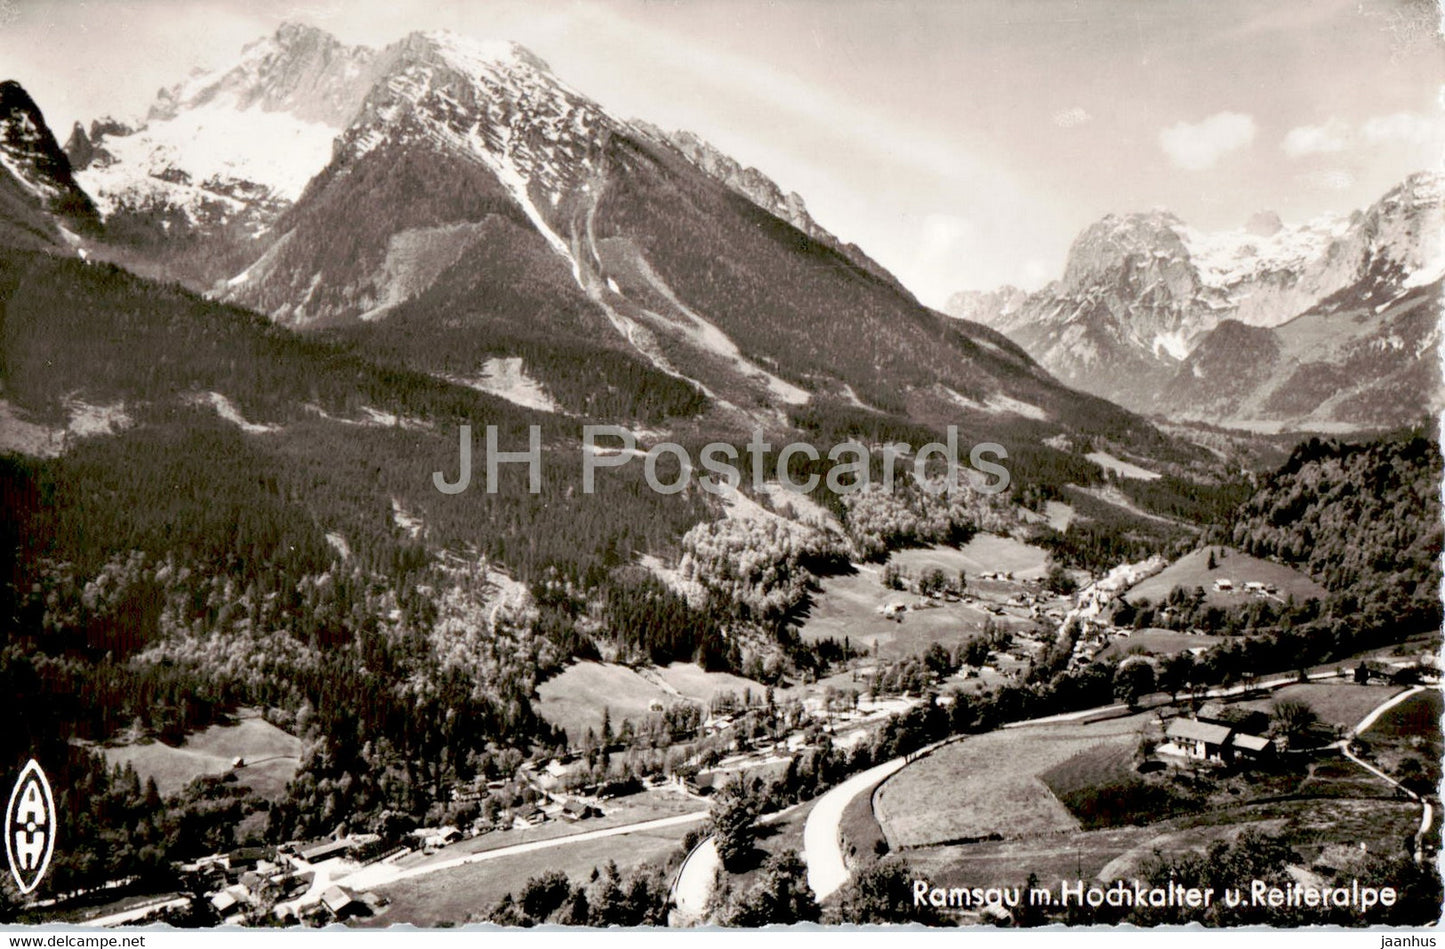 Ramsau m Hochkalter u Reiteralpe - 1964 - Germany - used - JH Postcards